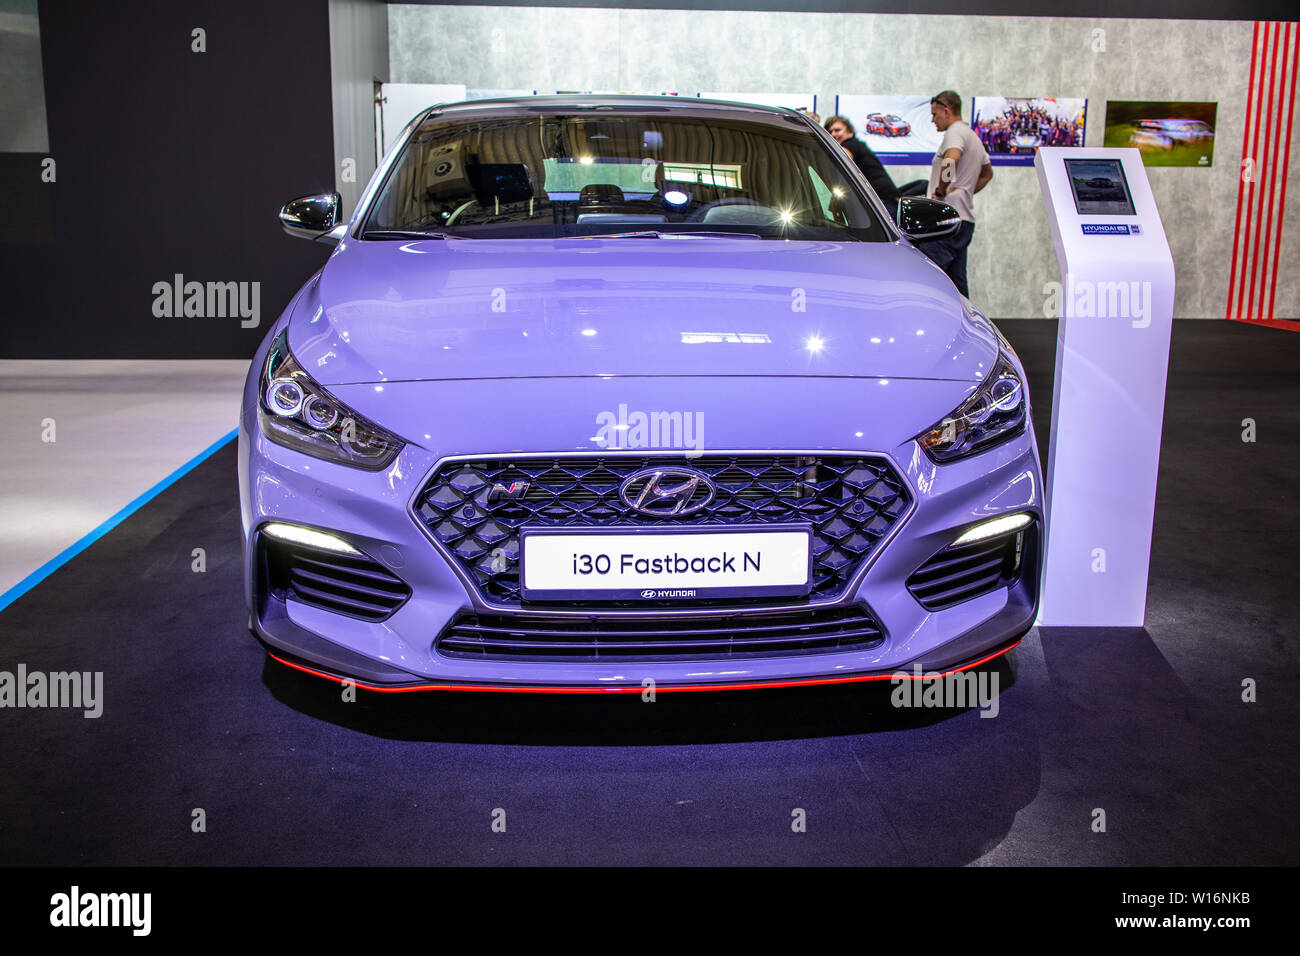 2020 Hyundai I30 Fastback N Car Editorial Stock Photo - Image of